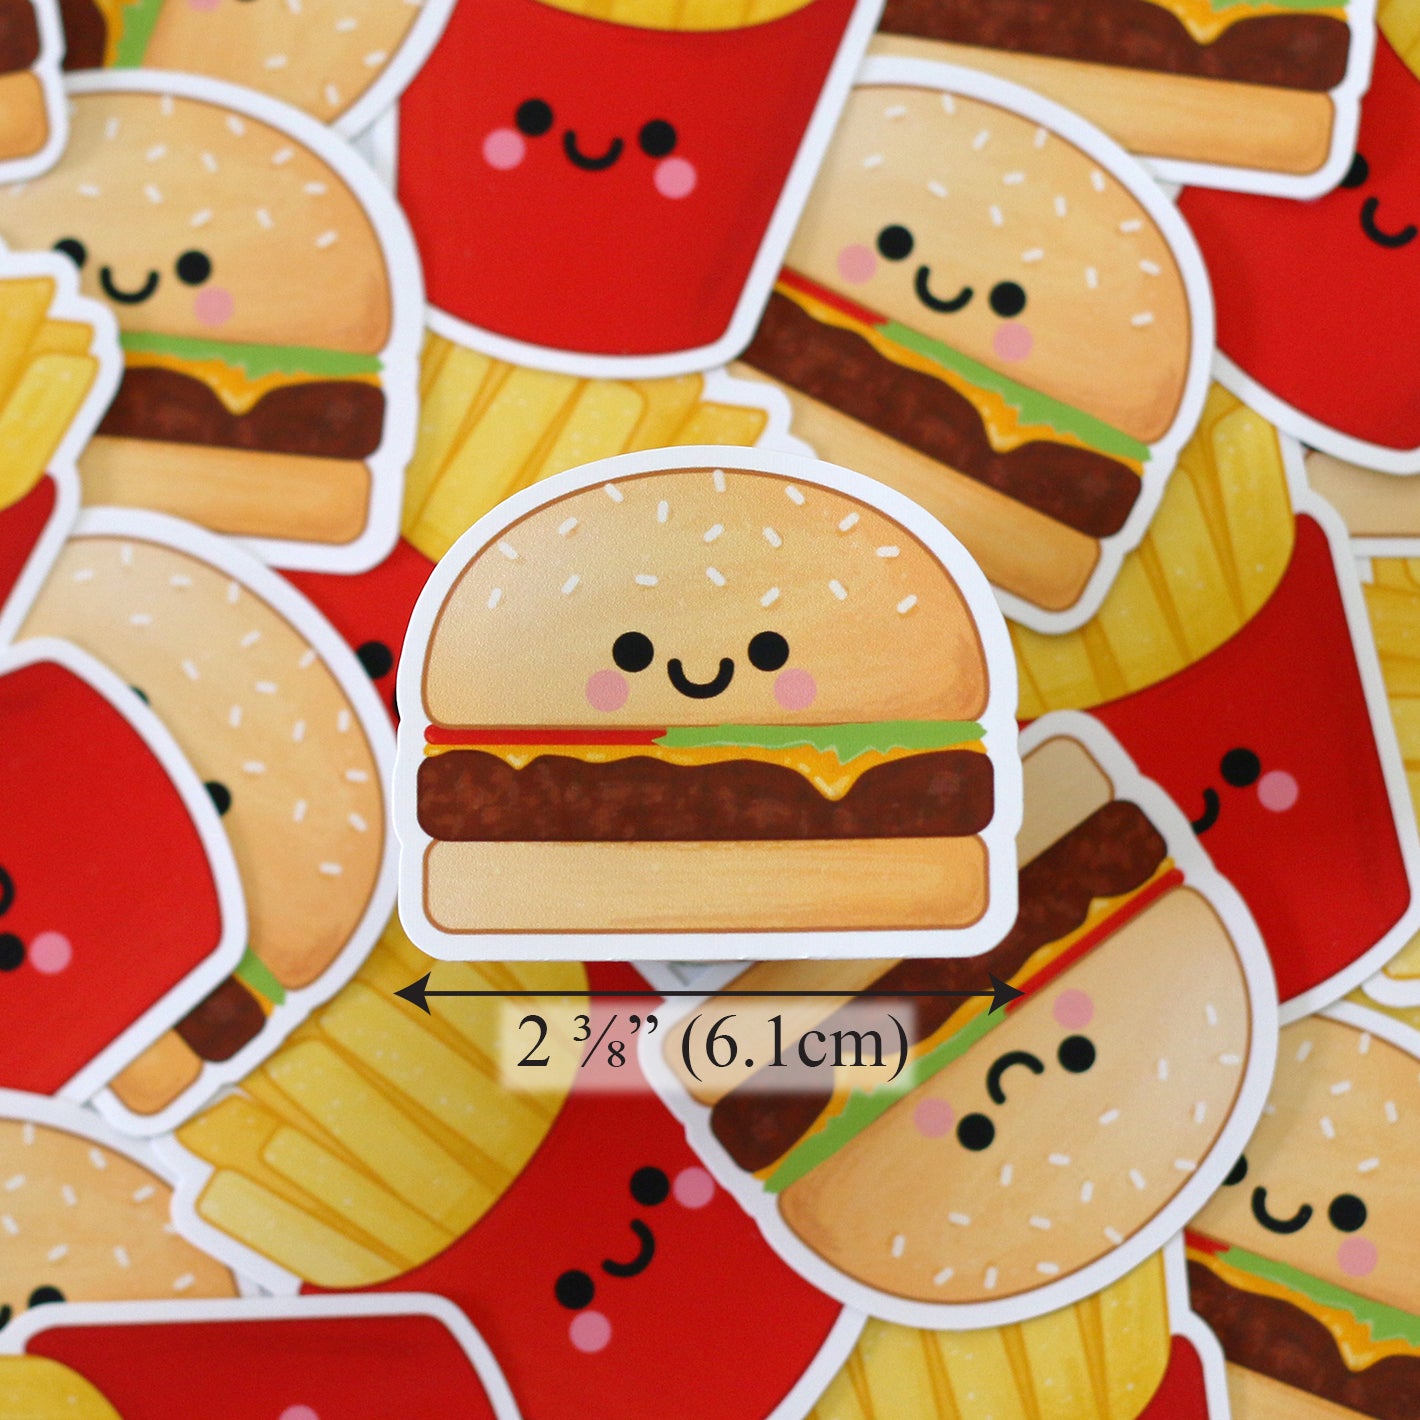 Cute Burger Sticker